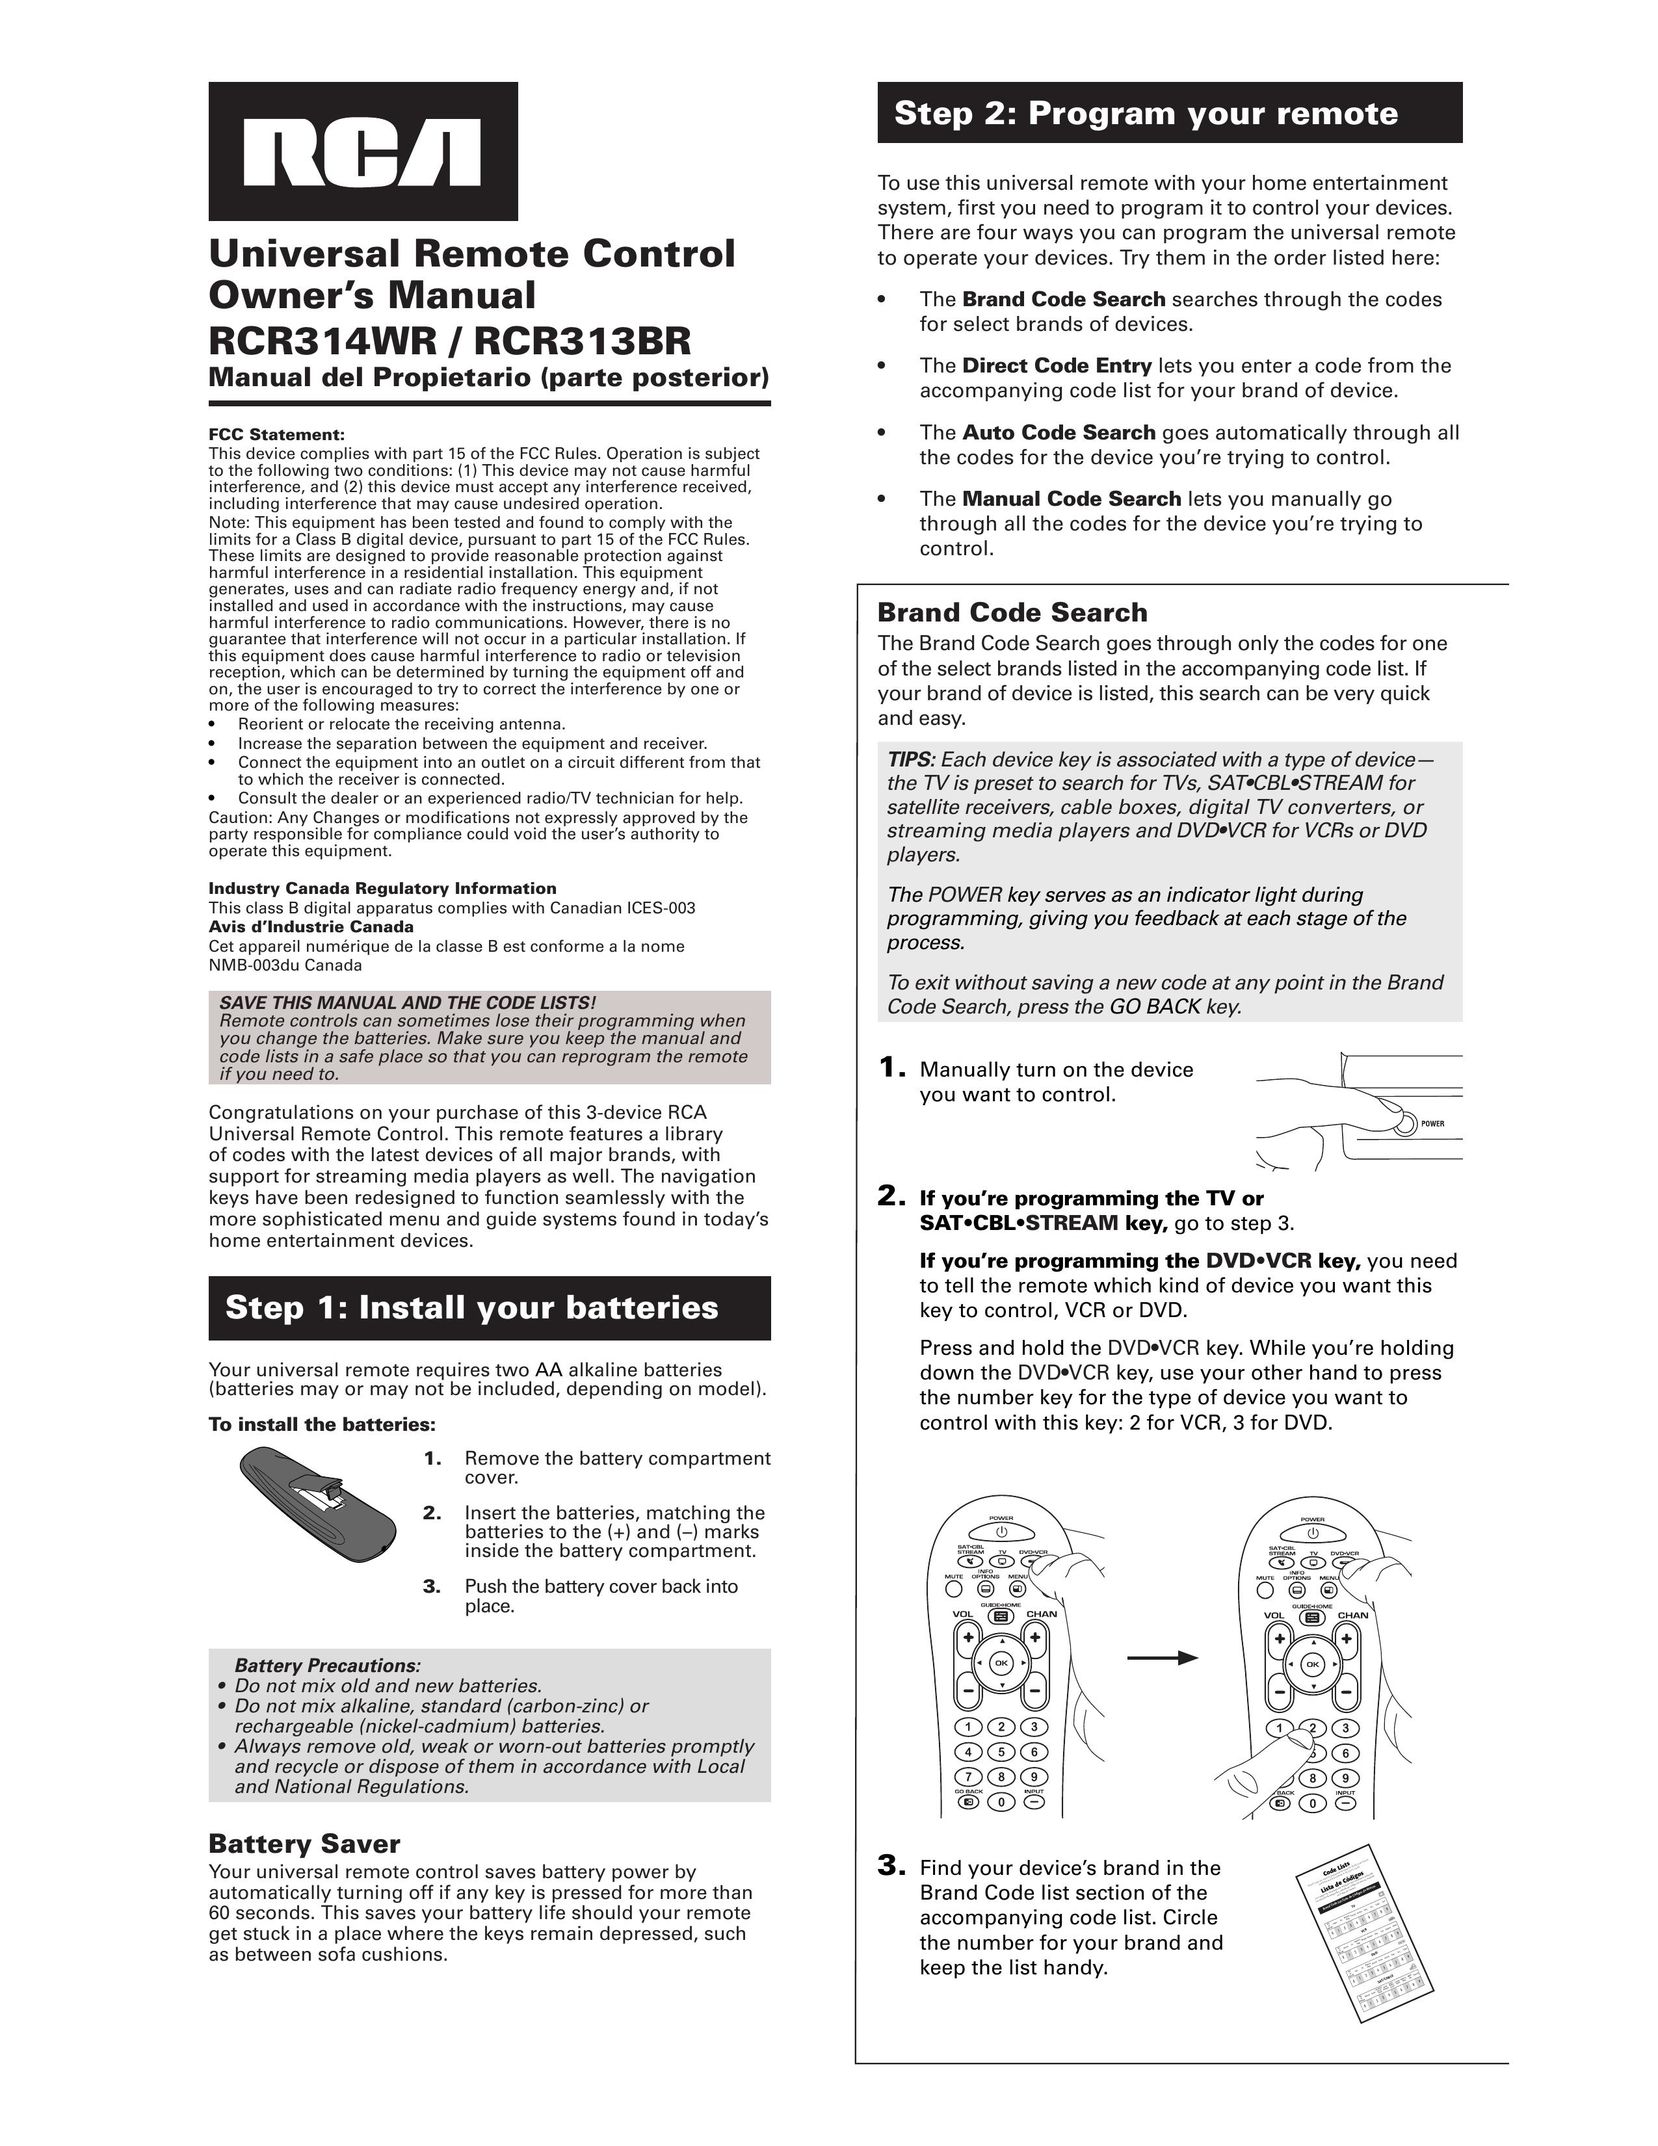 RCA RCR313BR Universal Remote User Manual